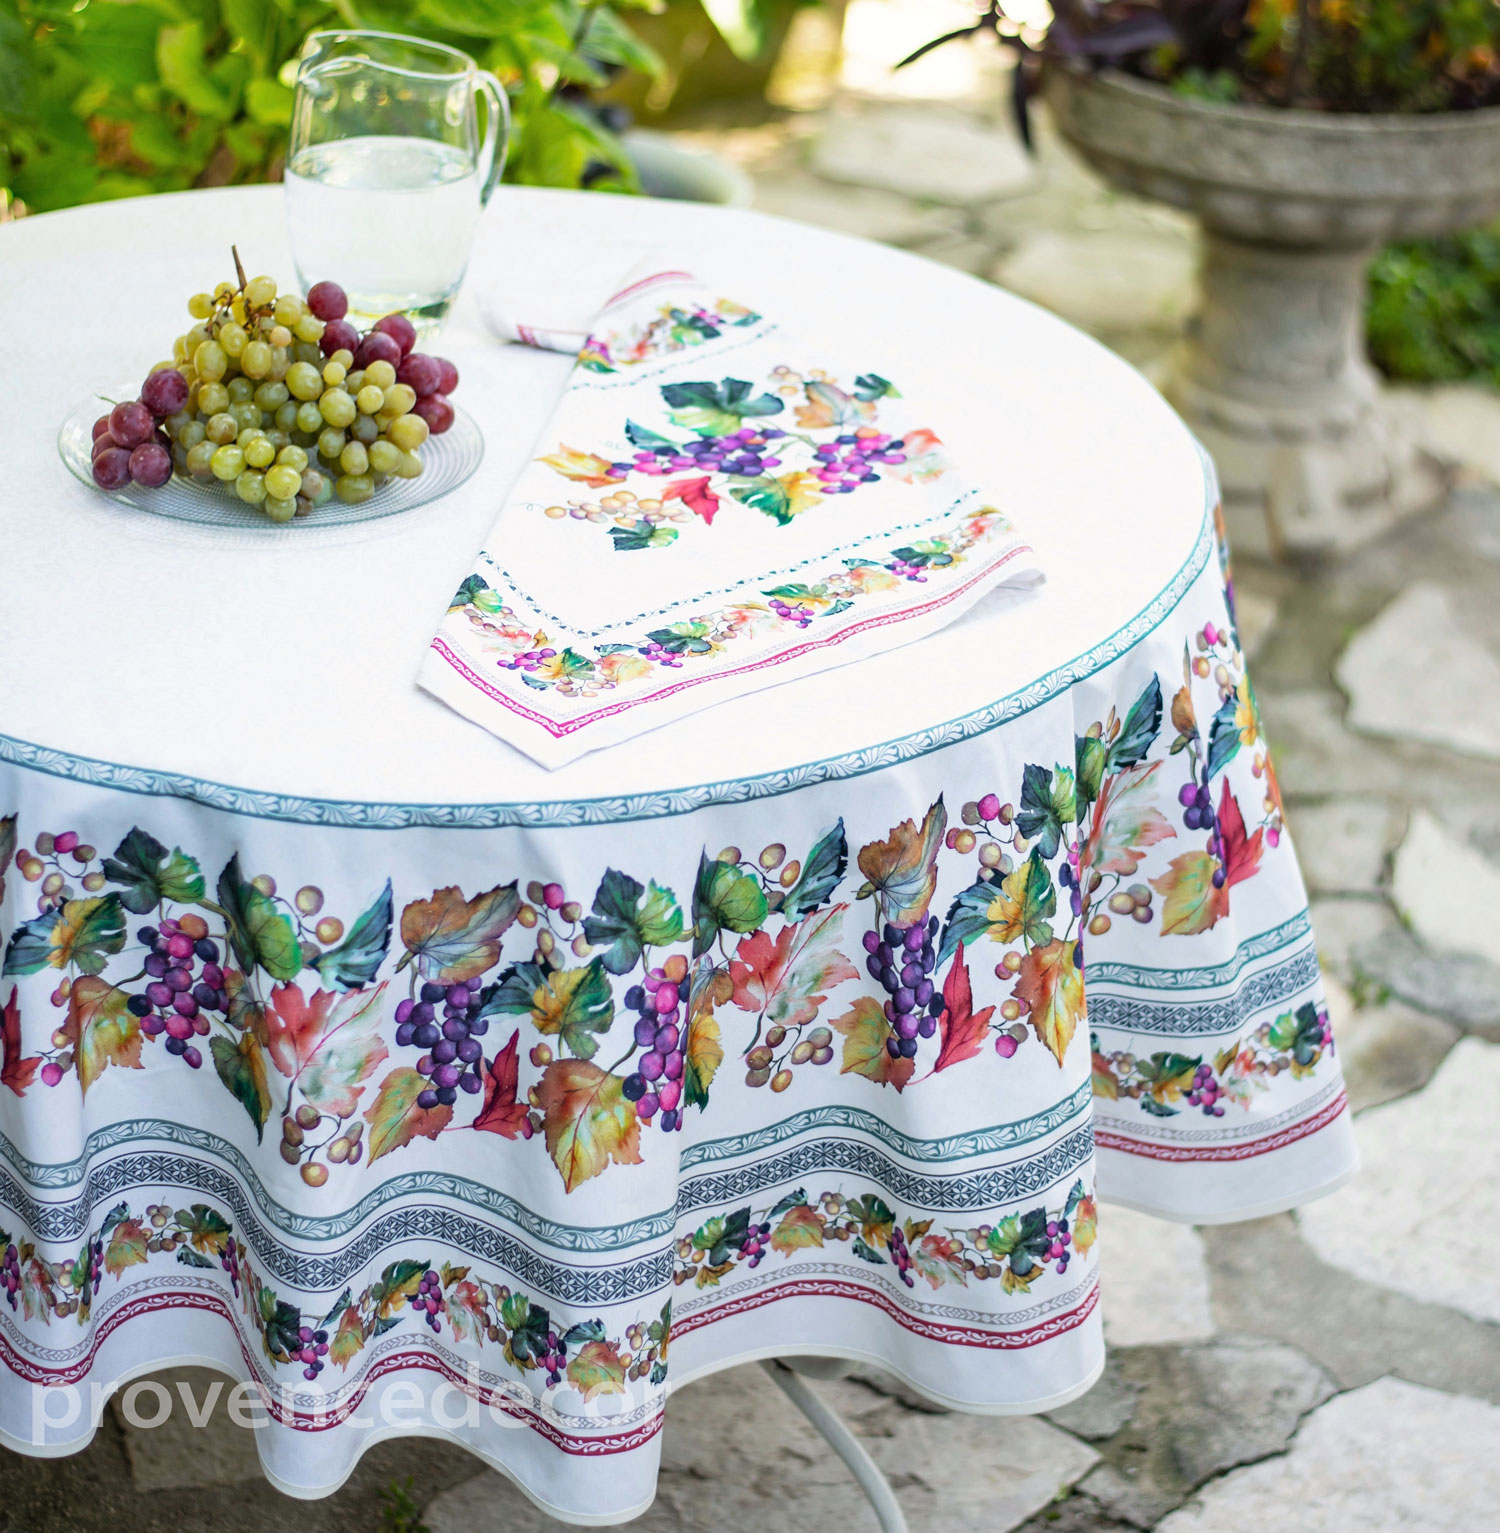 Cotton Linen Tablecloth Floral Table Cover Fabric Country Home Decor Retro 